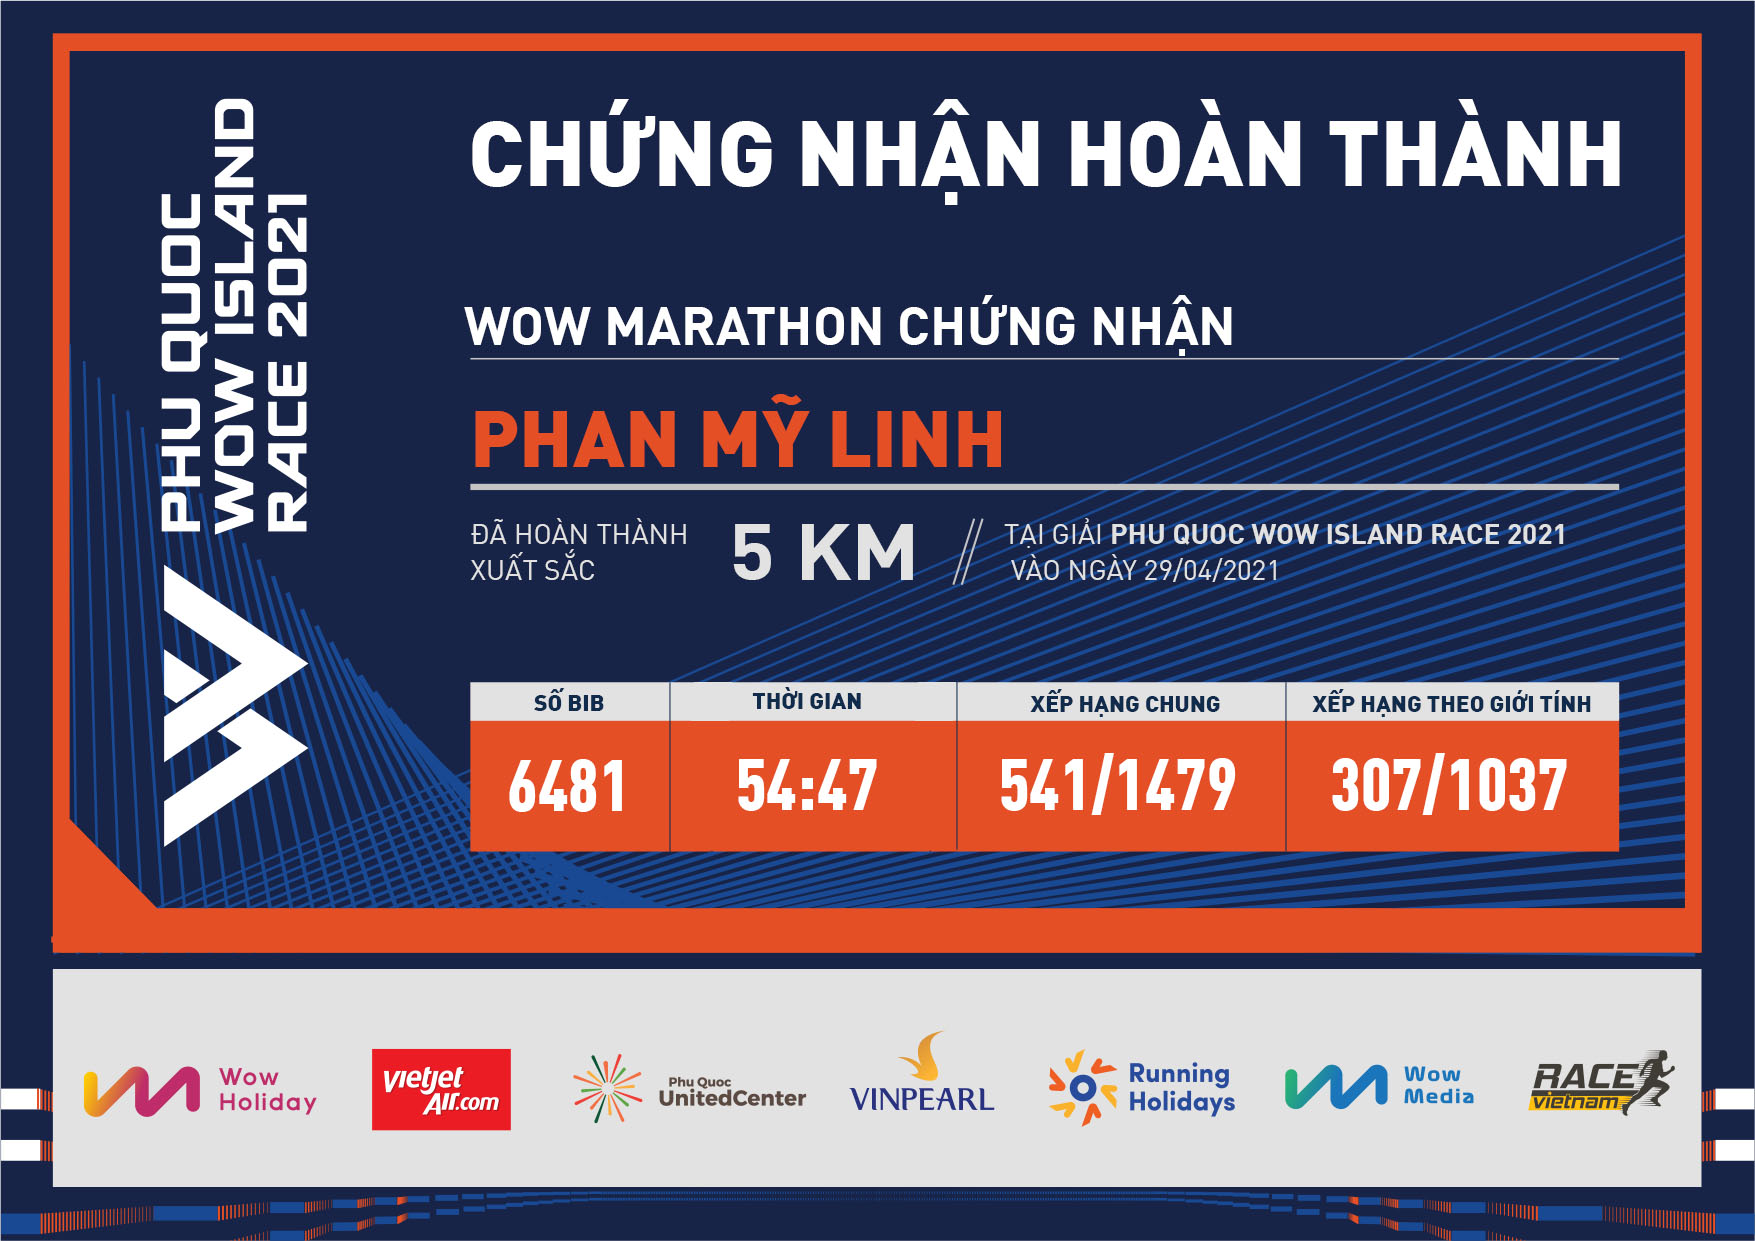 6481 - Phan Mỹ Linh